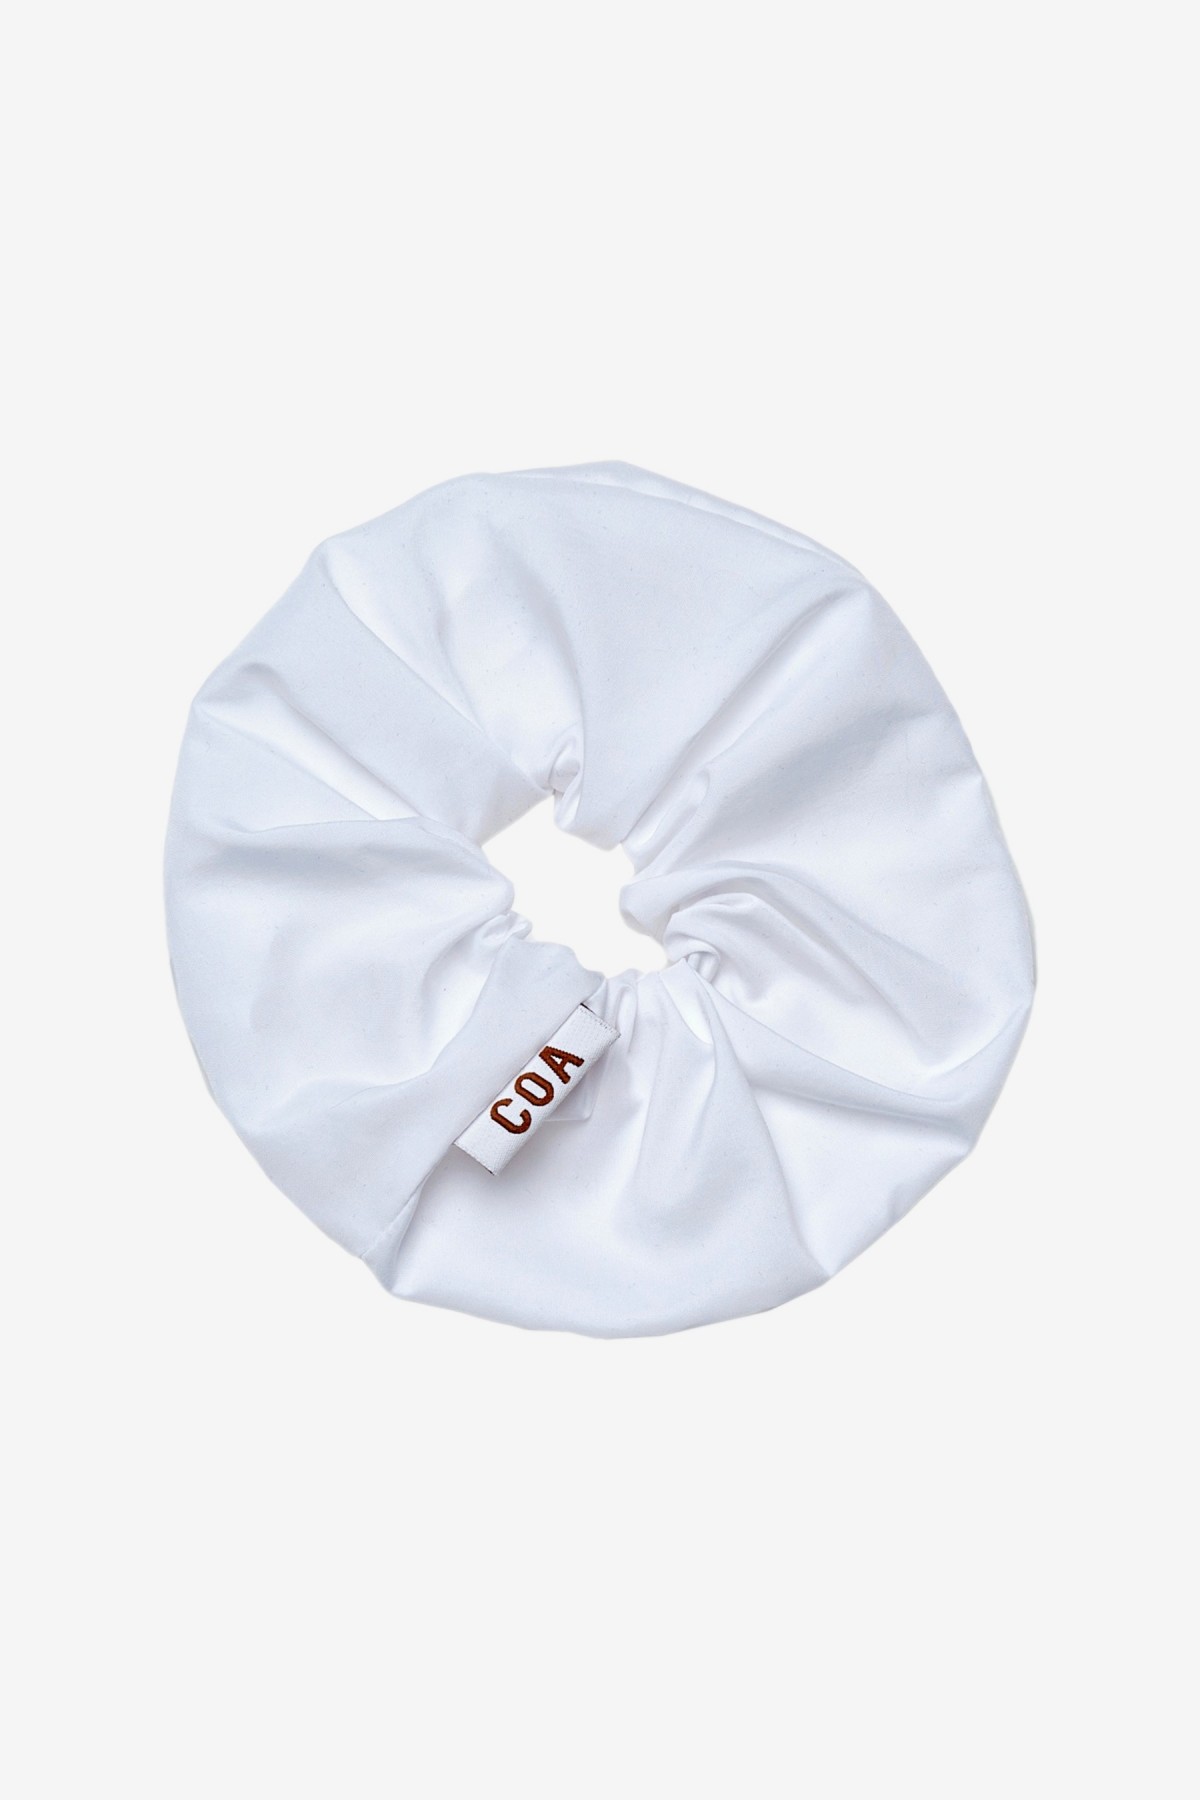 CoA NYC Oversized Scrunchie in White